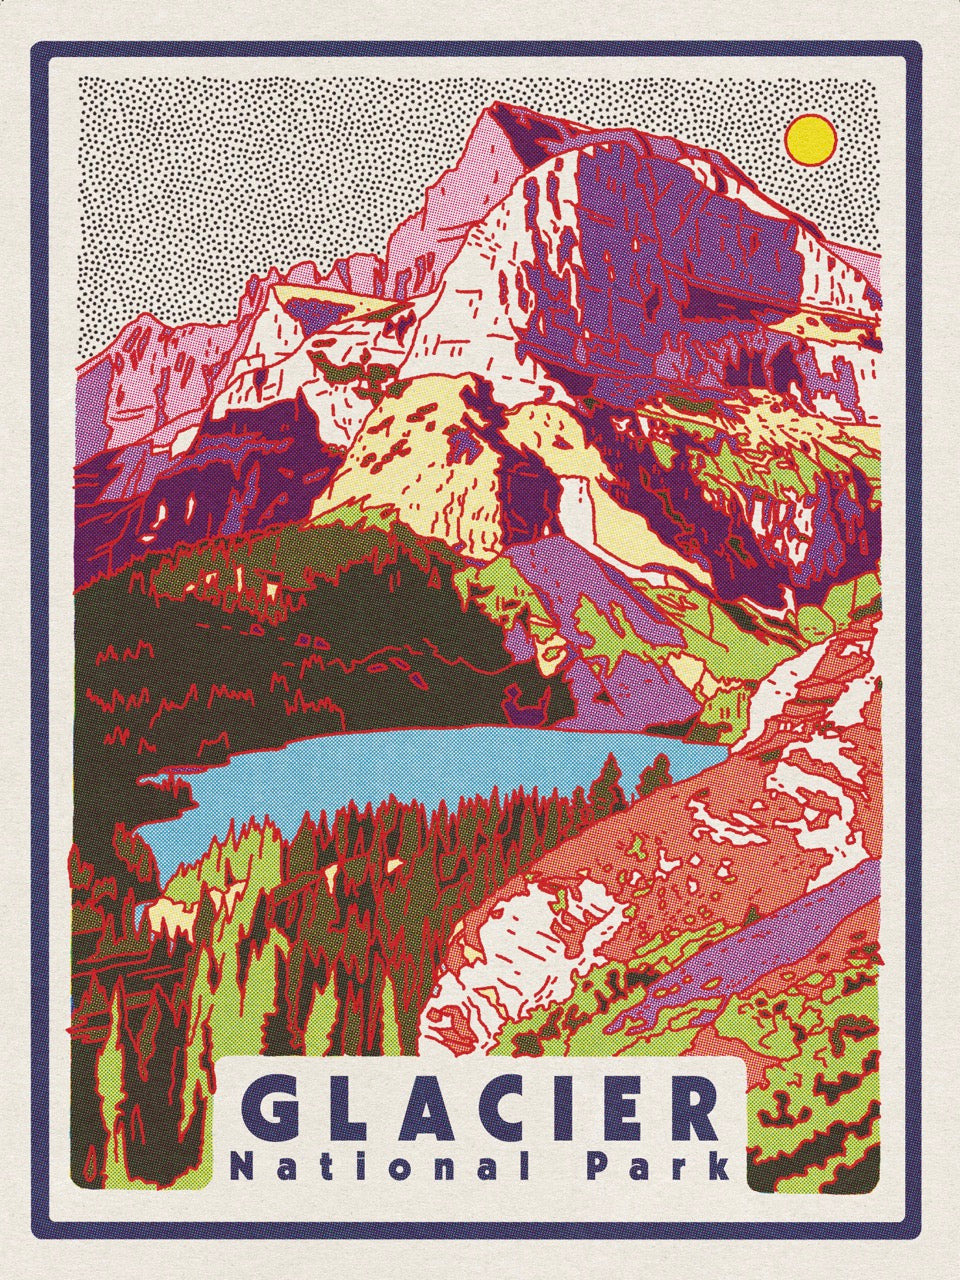 Glacier National Park 18"x24" Screen Print